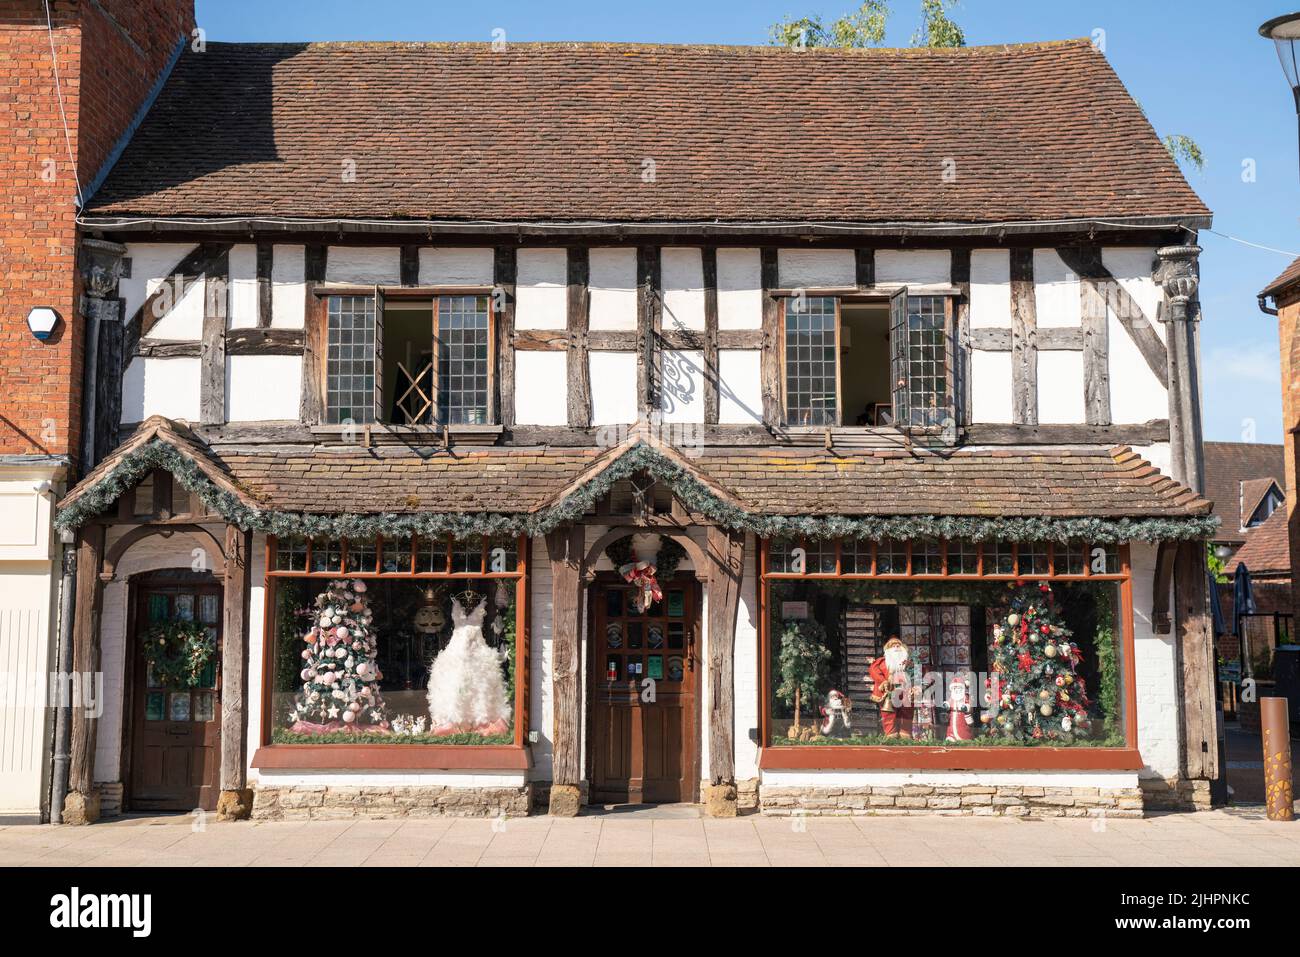 Der Nussknacker Christmas Shop in Stratford-upon-Avon. Stockfoto